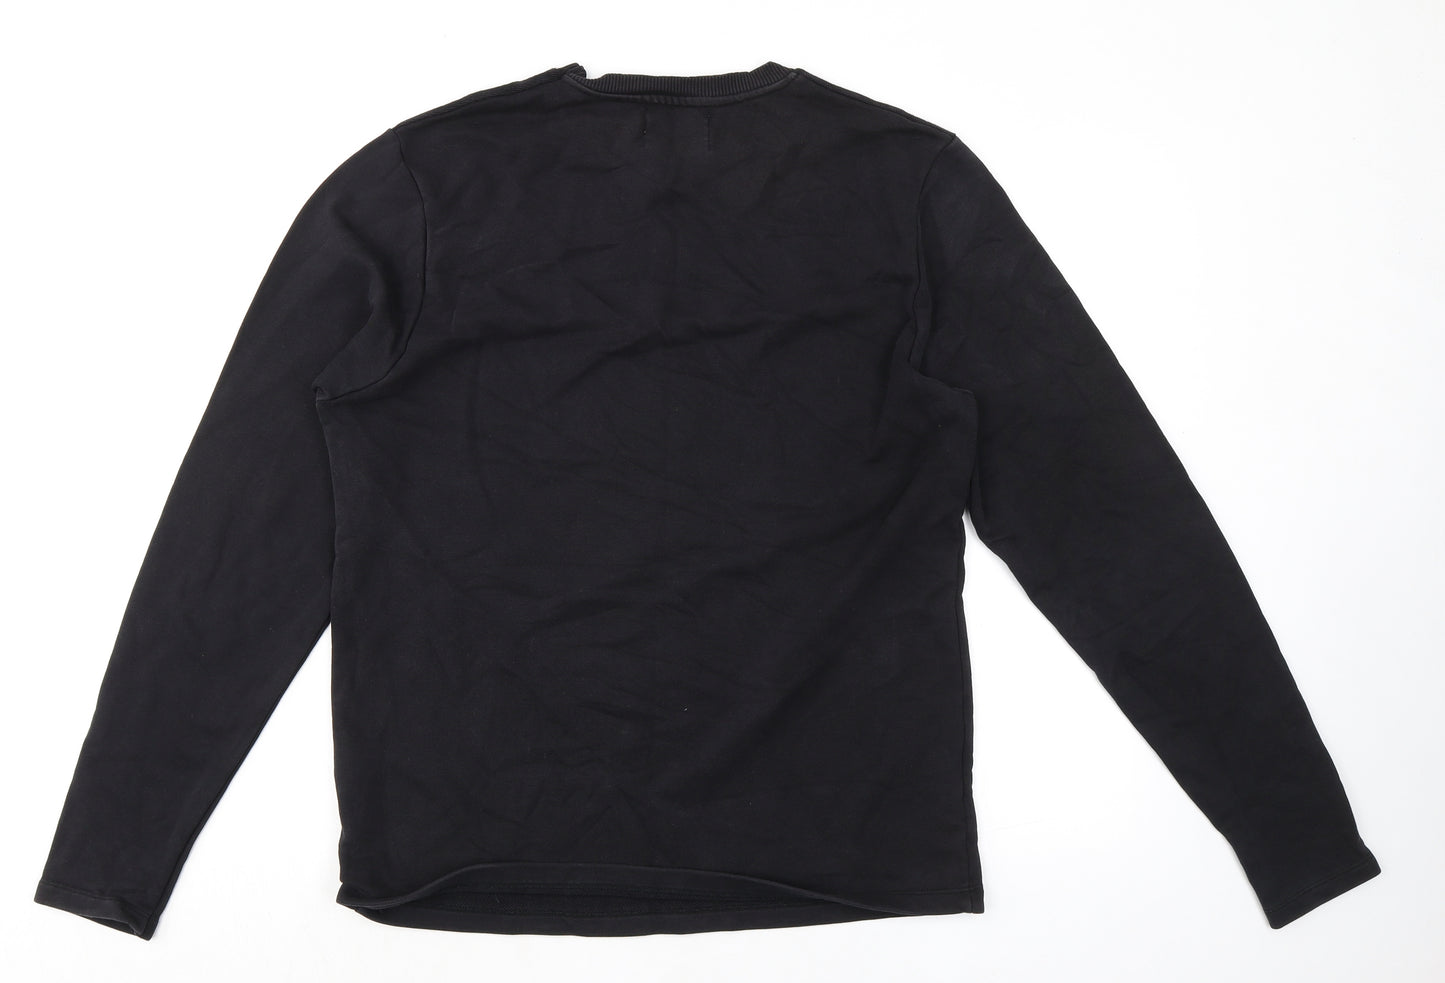 Topman Mens Black Cotton Pullover Sweatshirt Size M